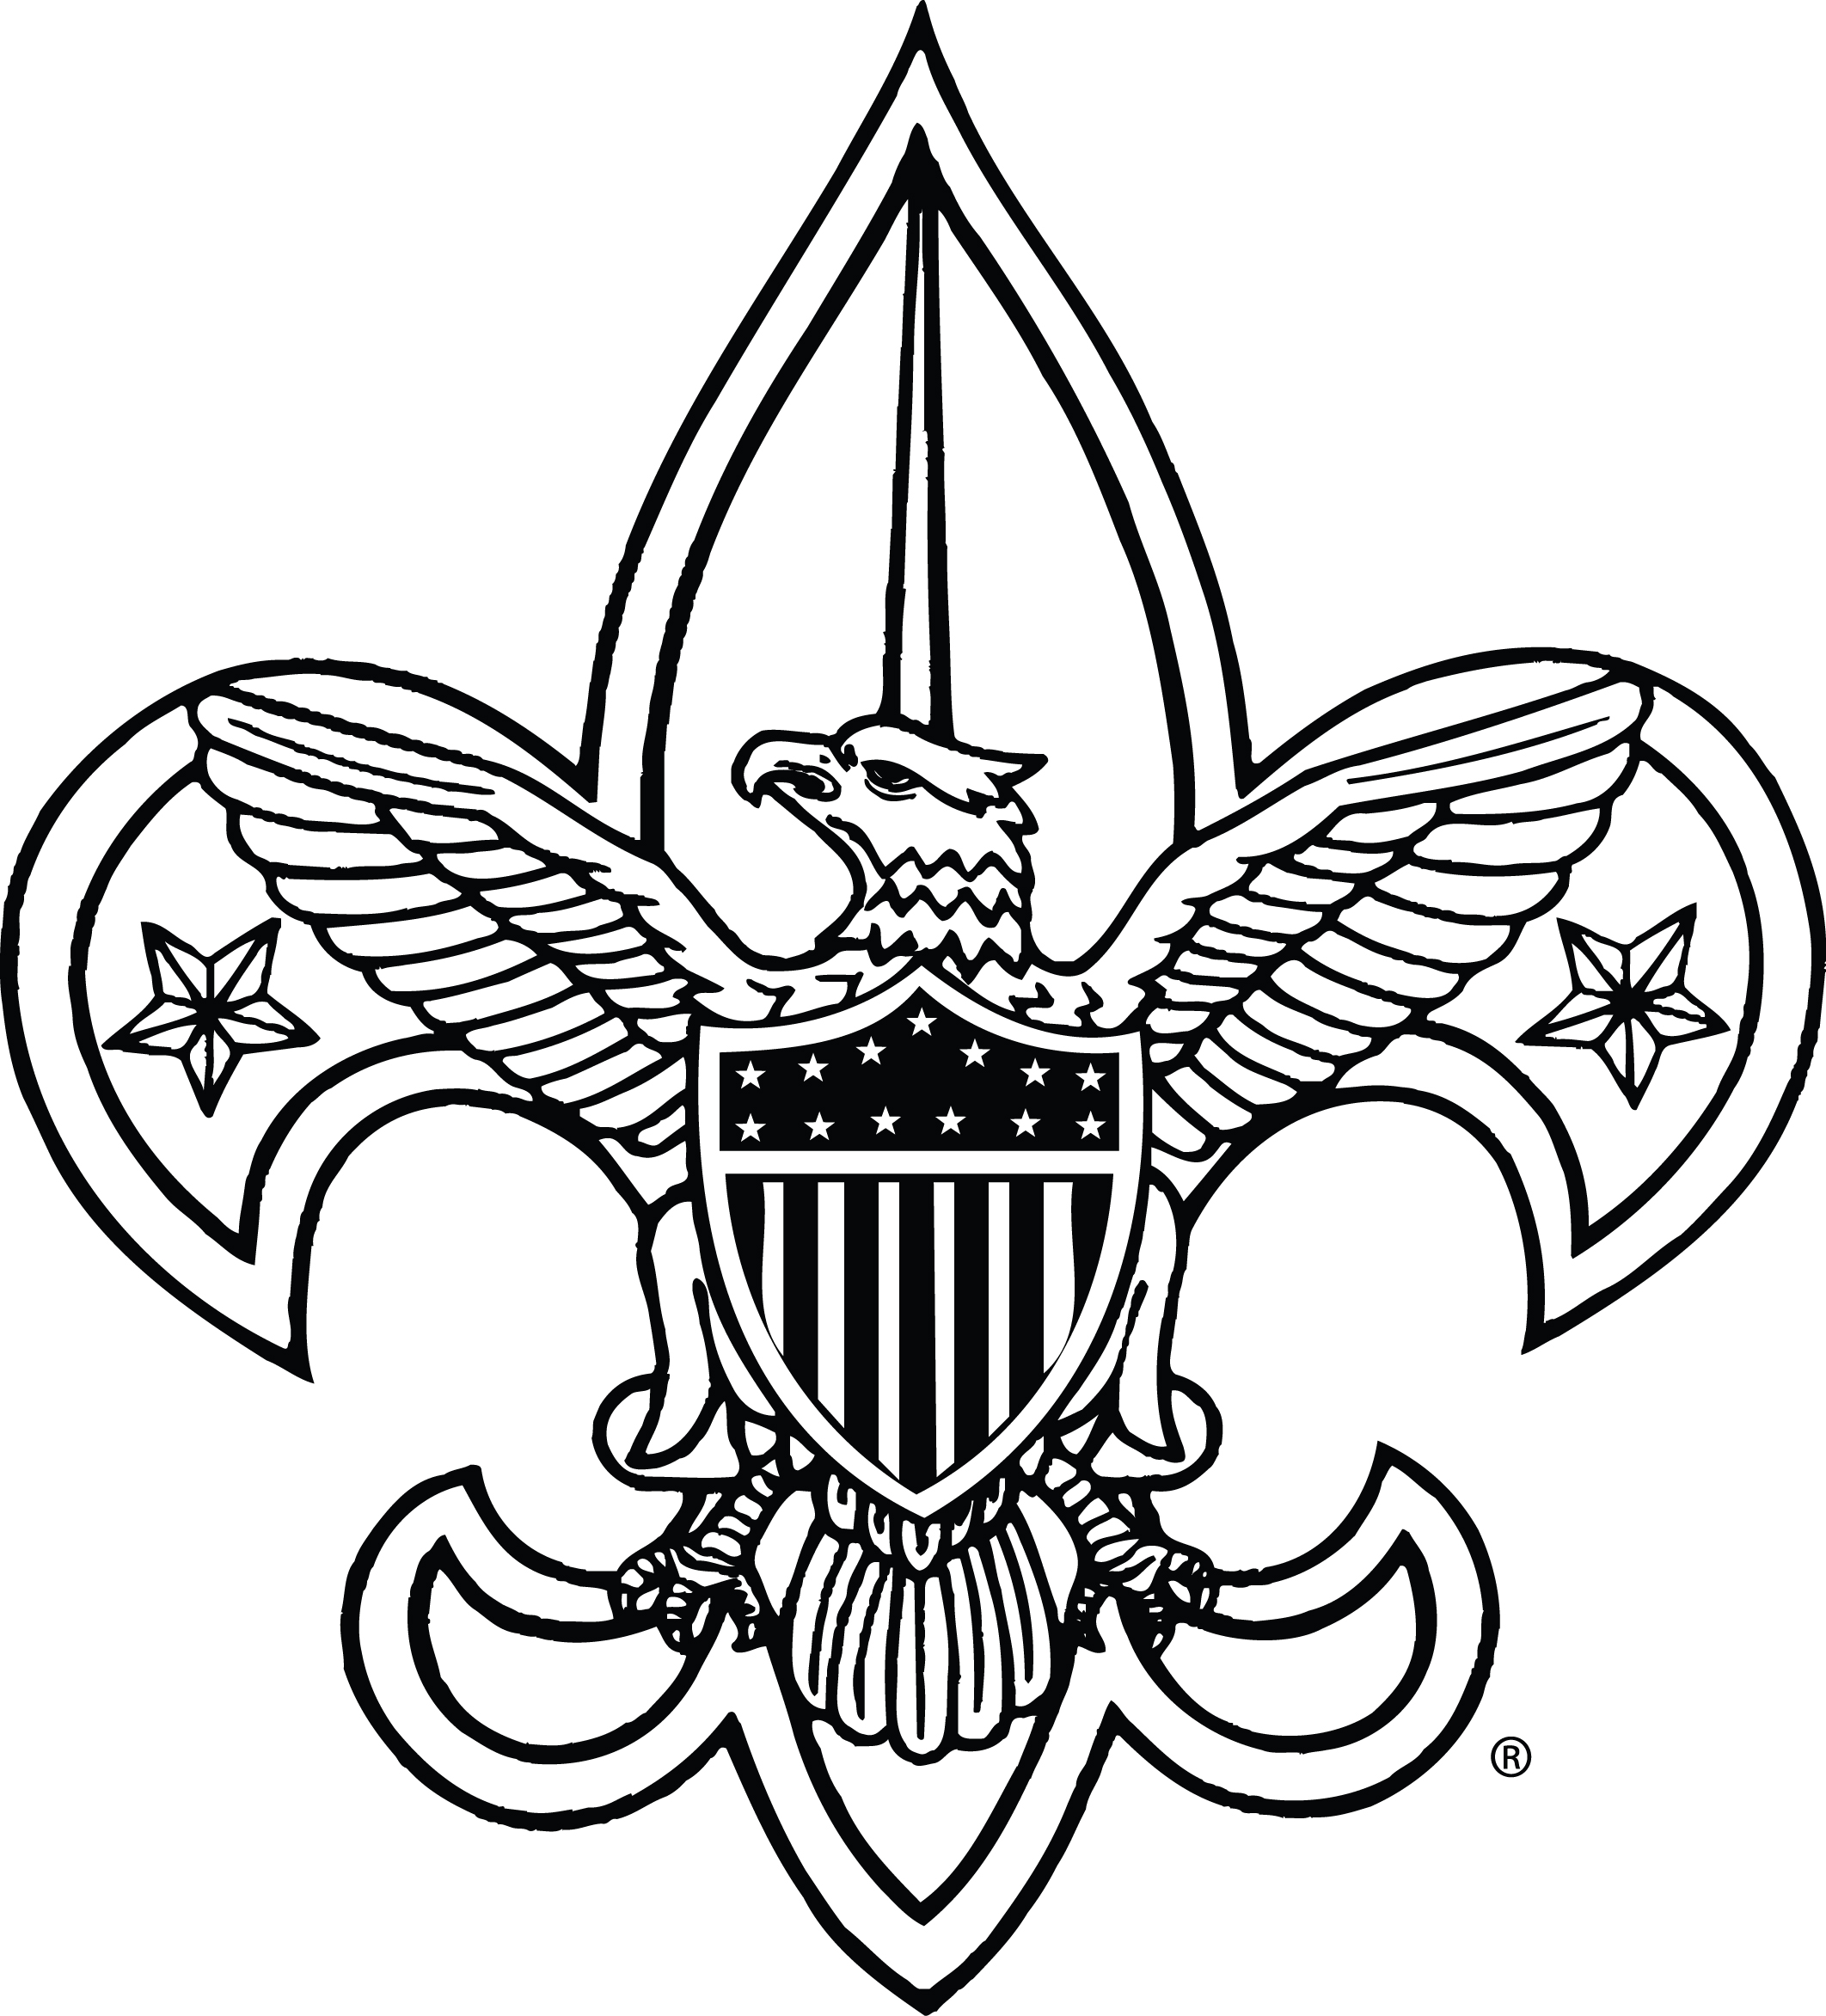 boy-scout-emblem-image-free-download-on-clipartmag